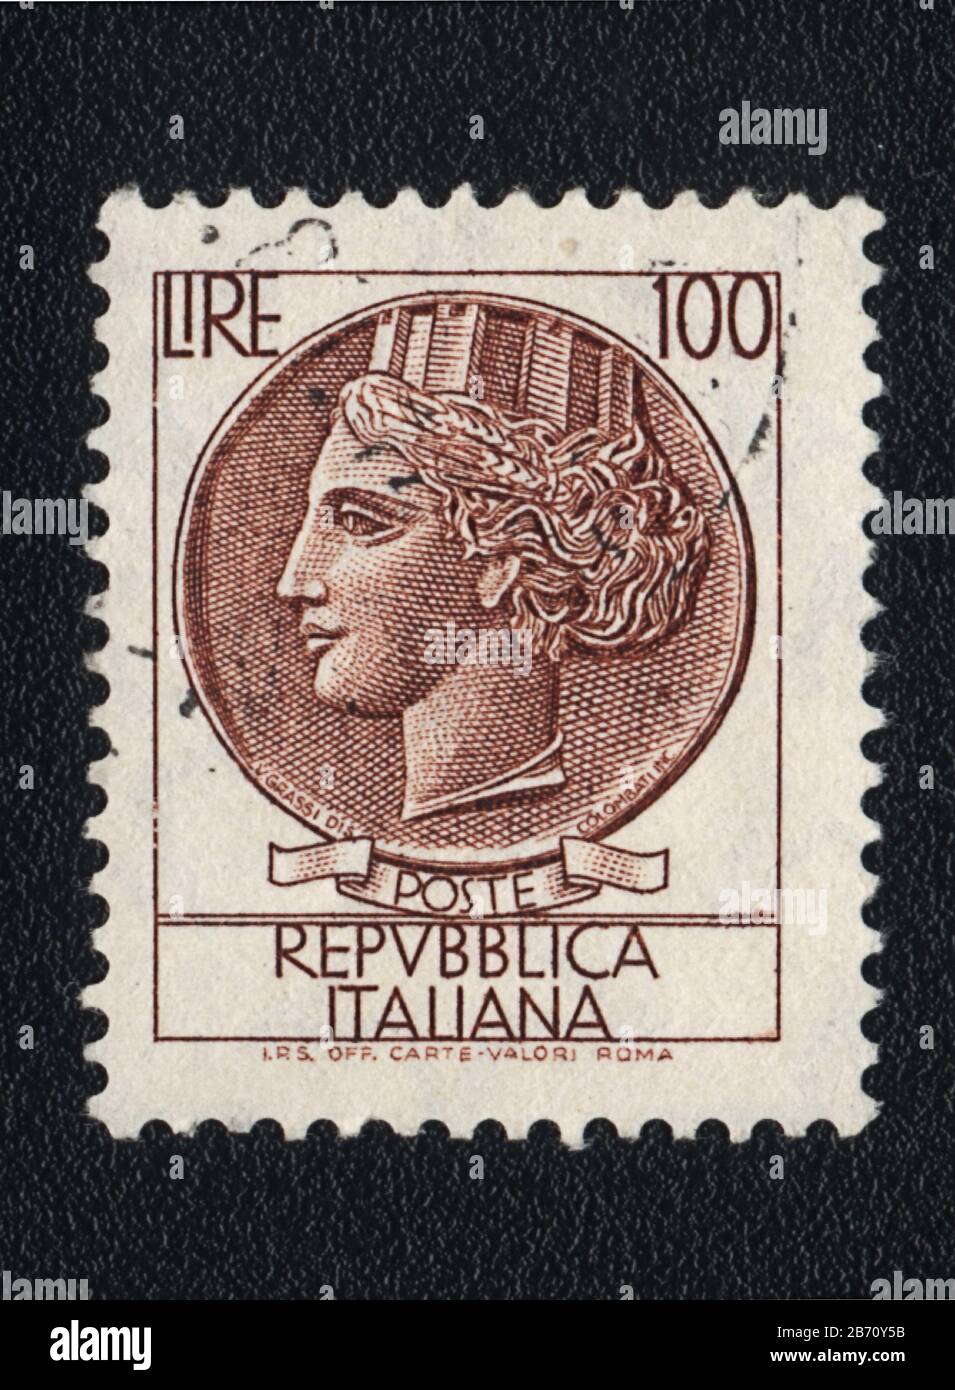 Italian Republic postage stamp 100 lire, Italy Stock Photo